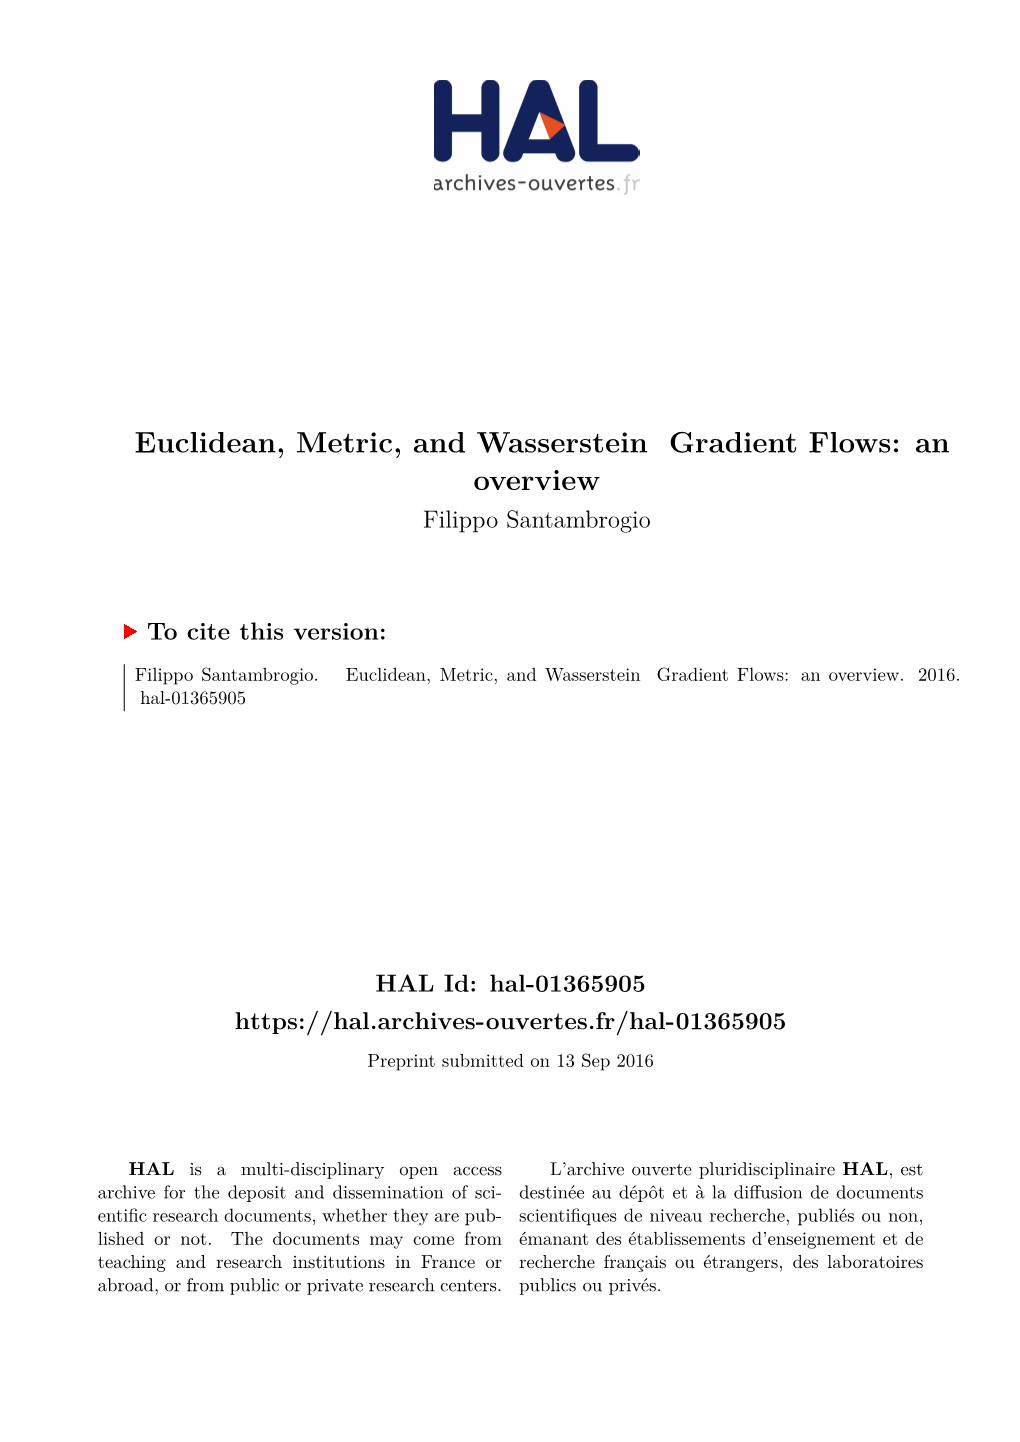 Euclidean, Metric, and Wasserstein Gradient Flows: an Overview Filippo Santambrogio